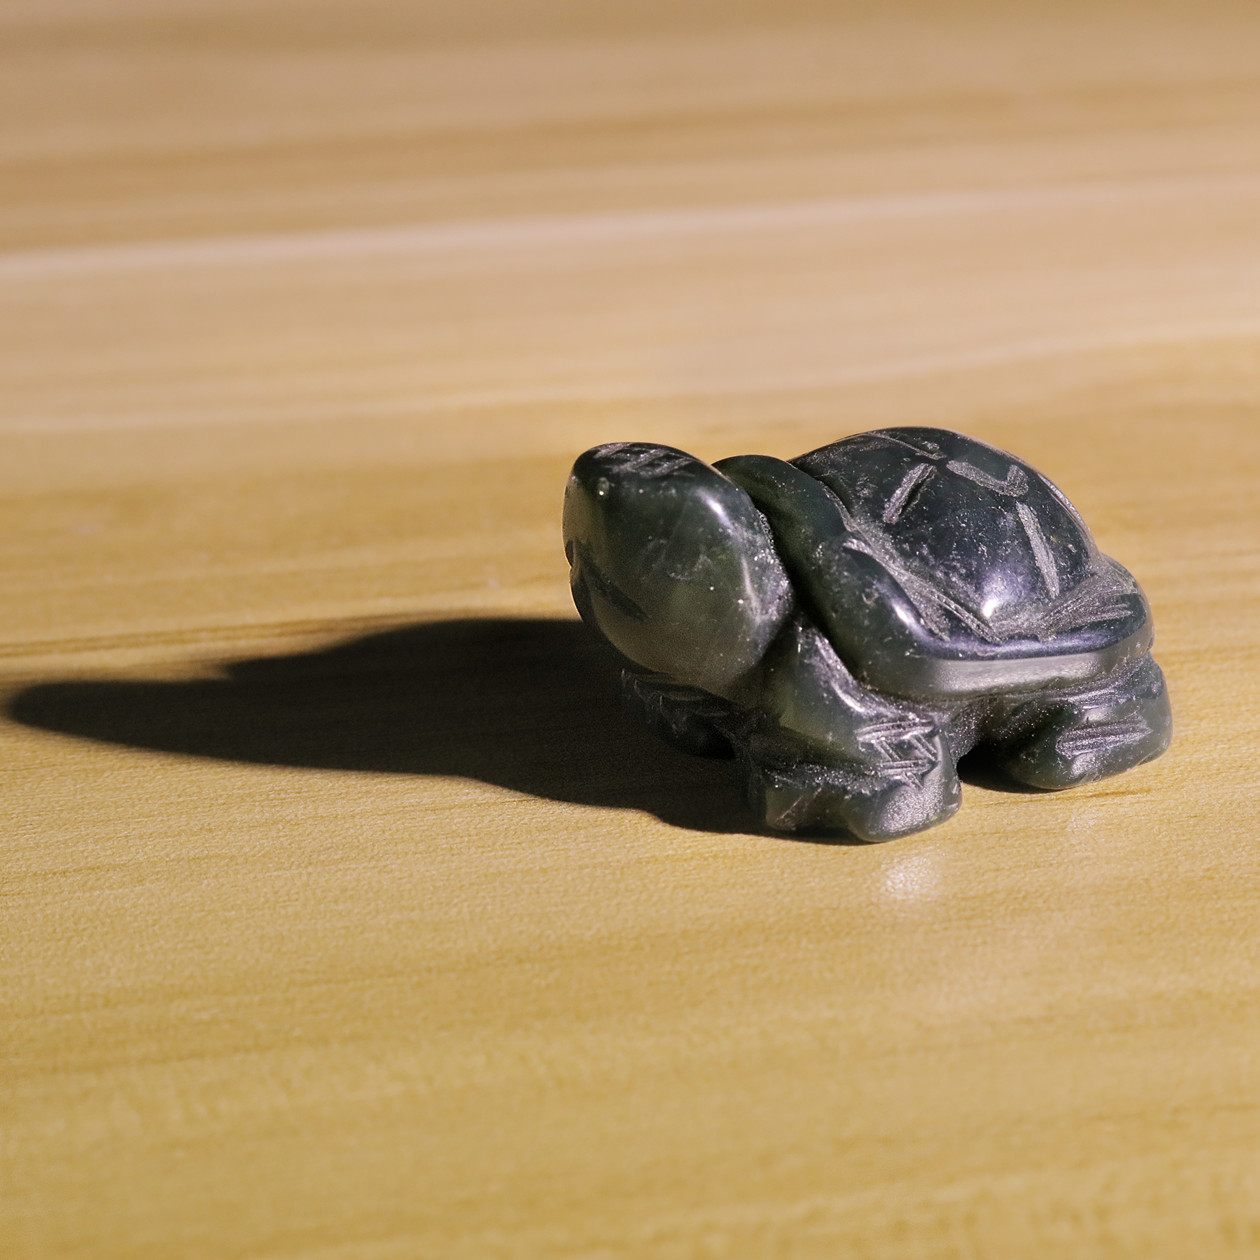 Small Animal Tortoise 1Each